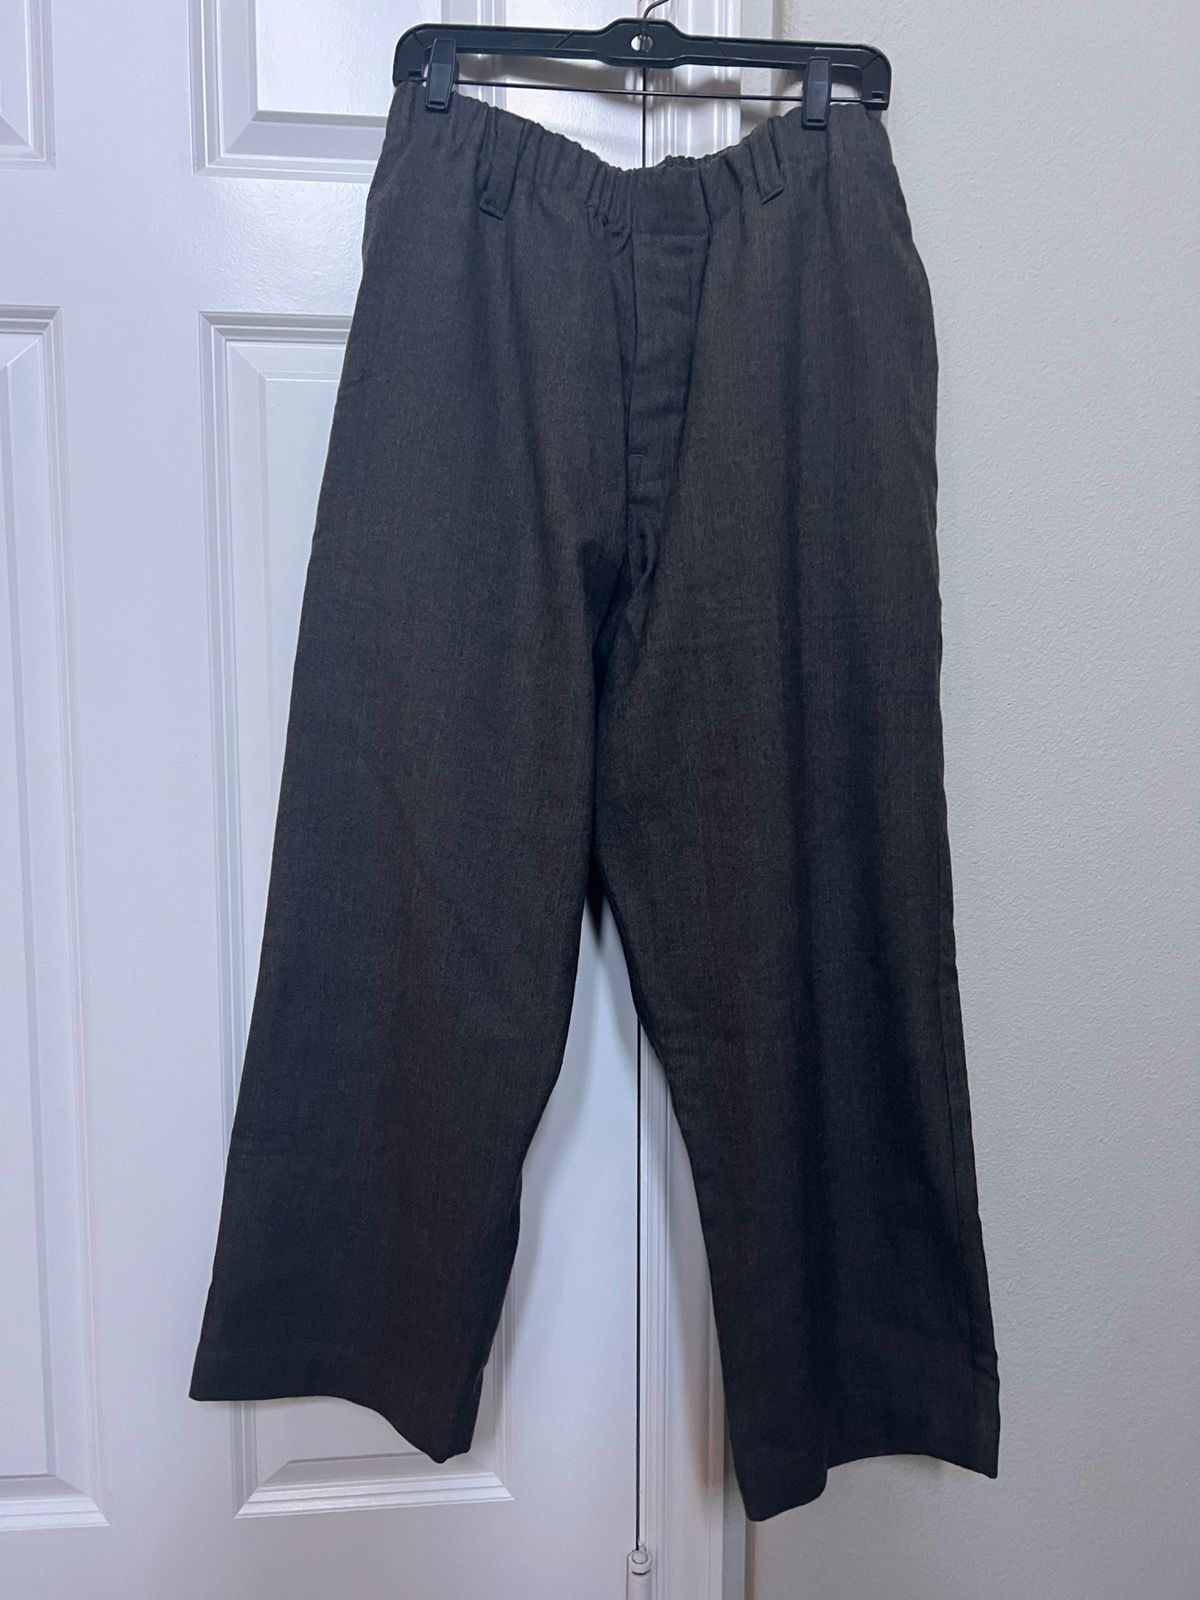 Pre-owned Evan Kinori Glencheck Wool Elastic Pants Size L In Glen Plaid